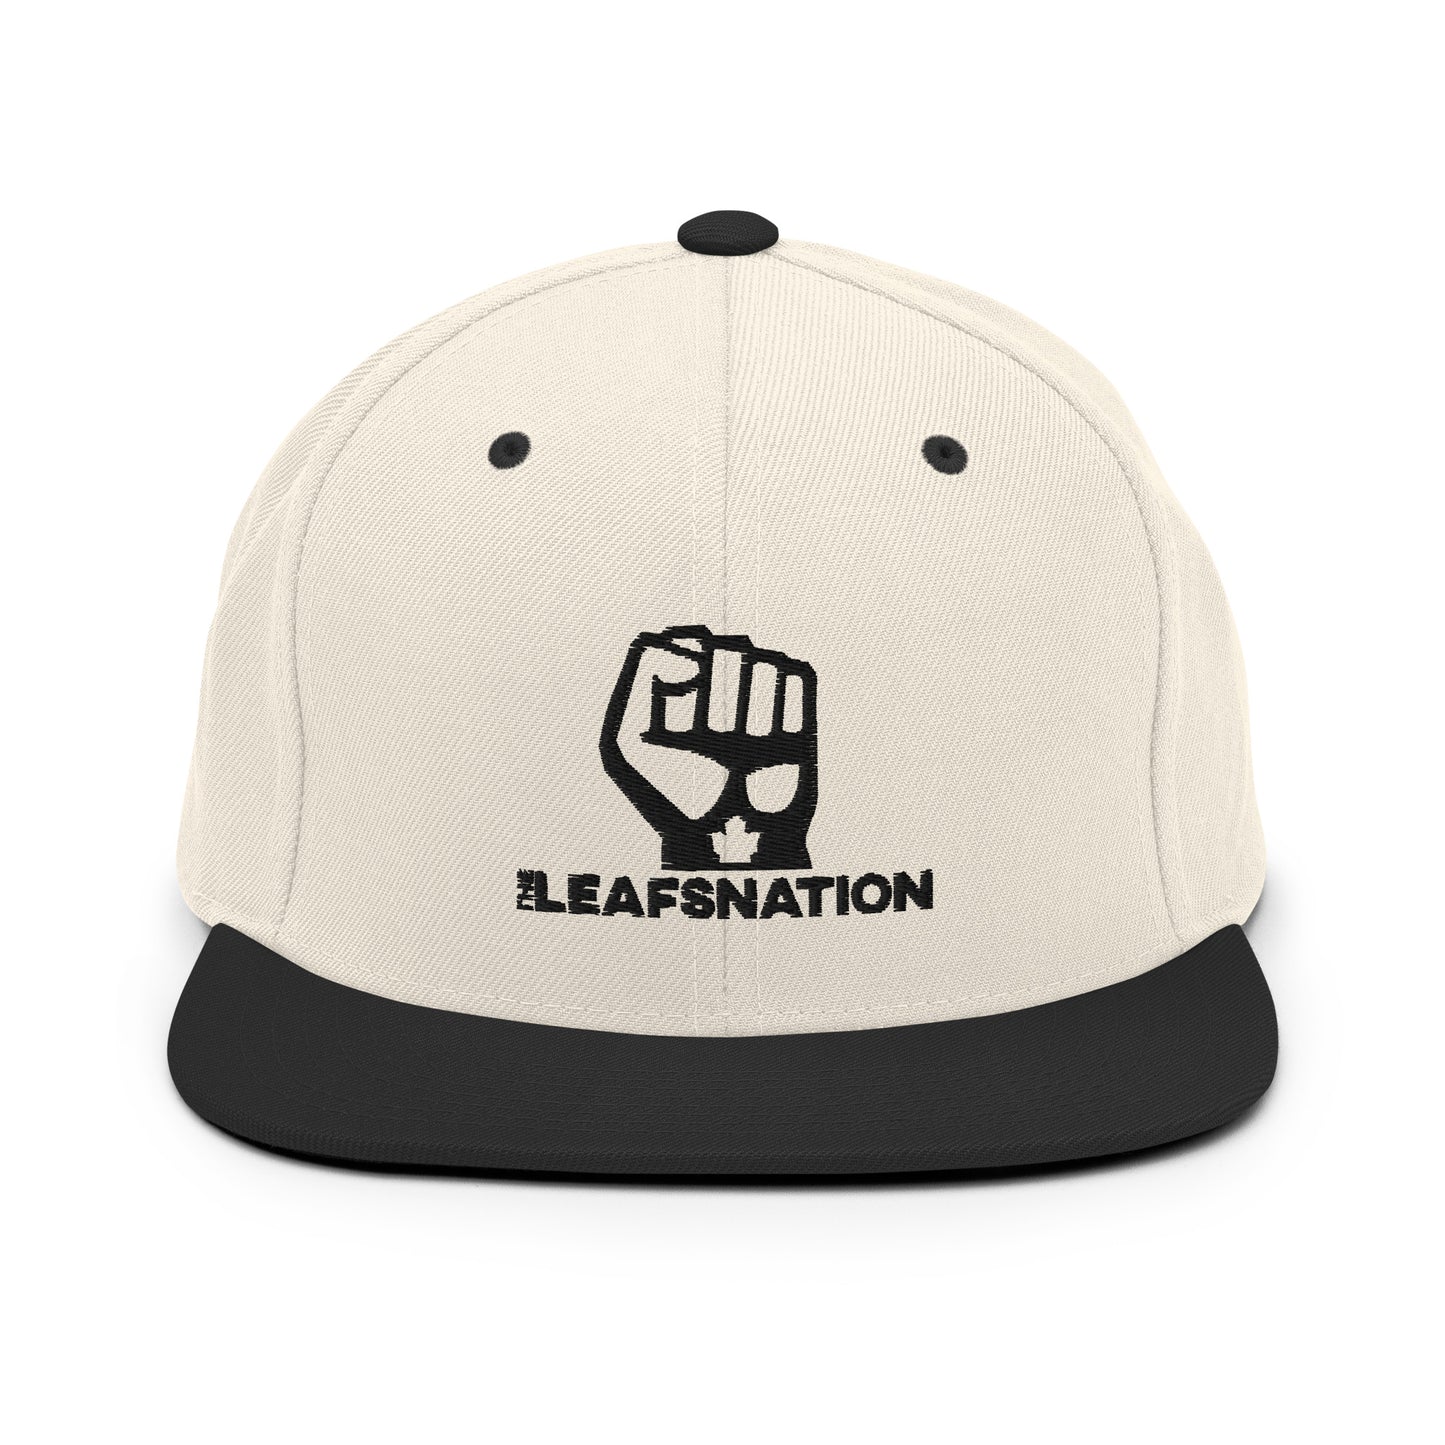 THE CLASSICS - Leafsnation White Snapback Hat